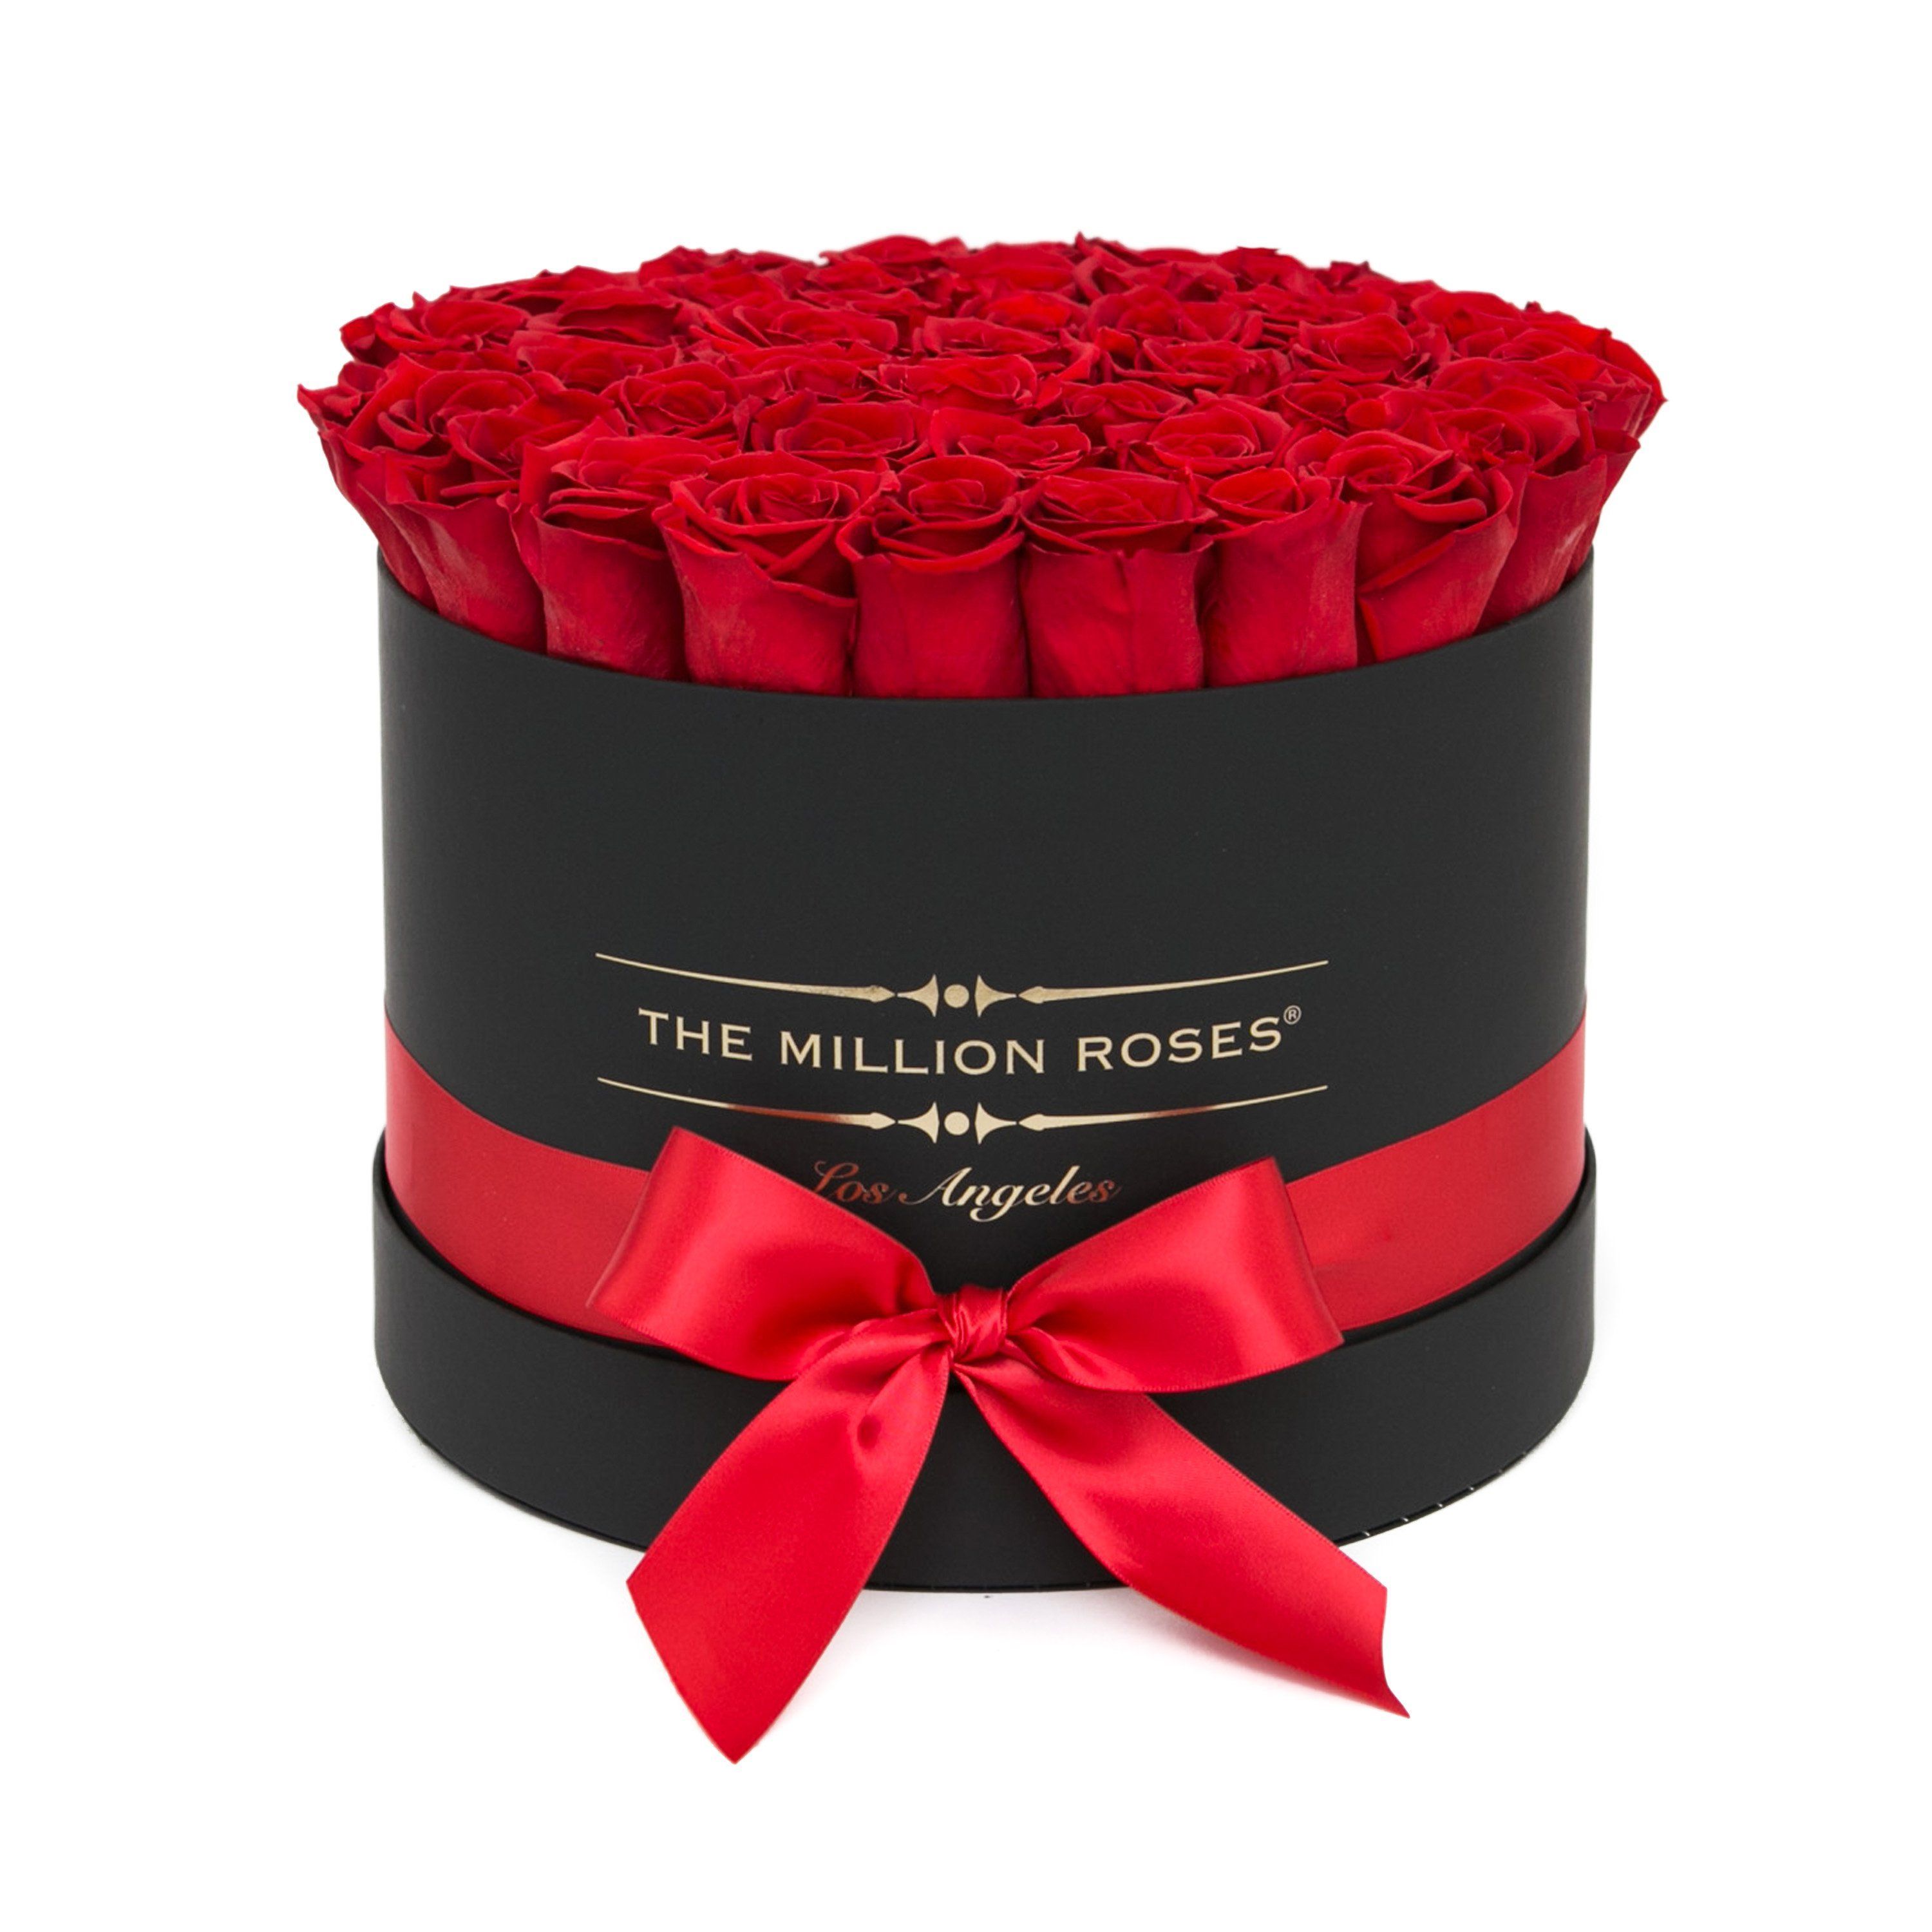 medium round box - black - red roses red eternity roses - the million roses